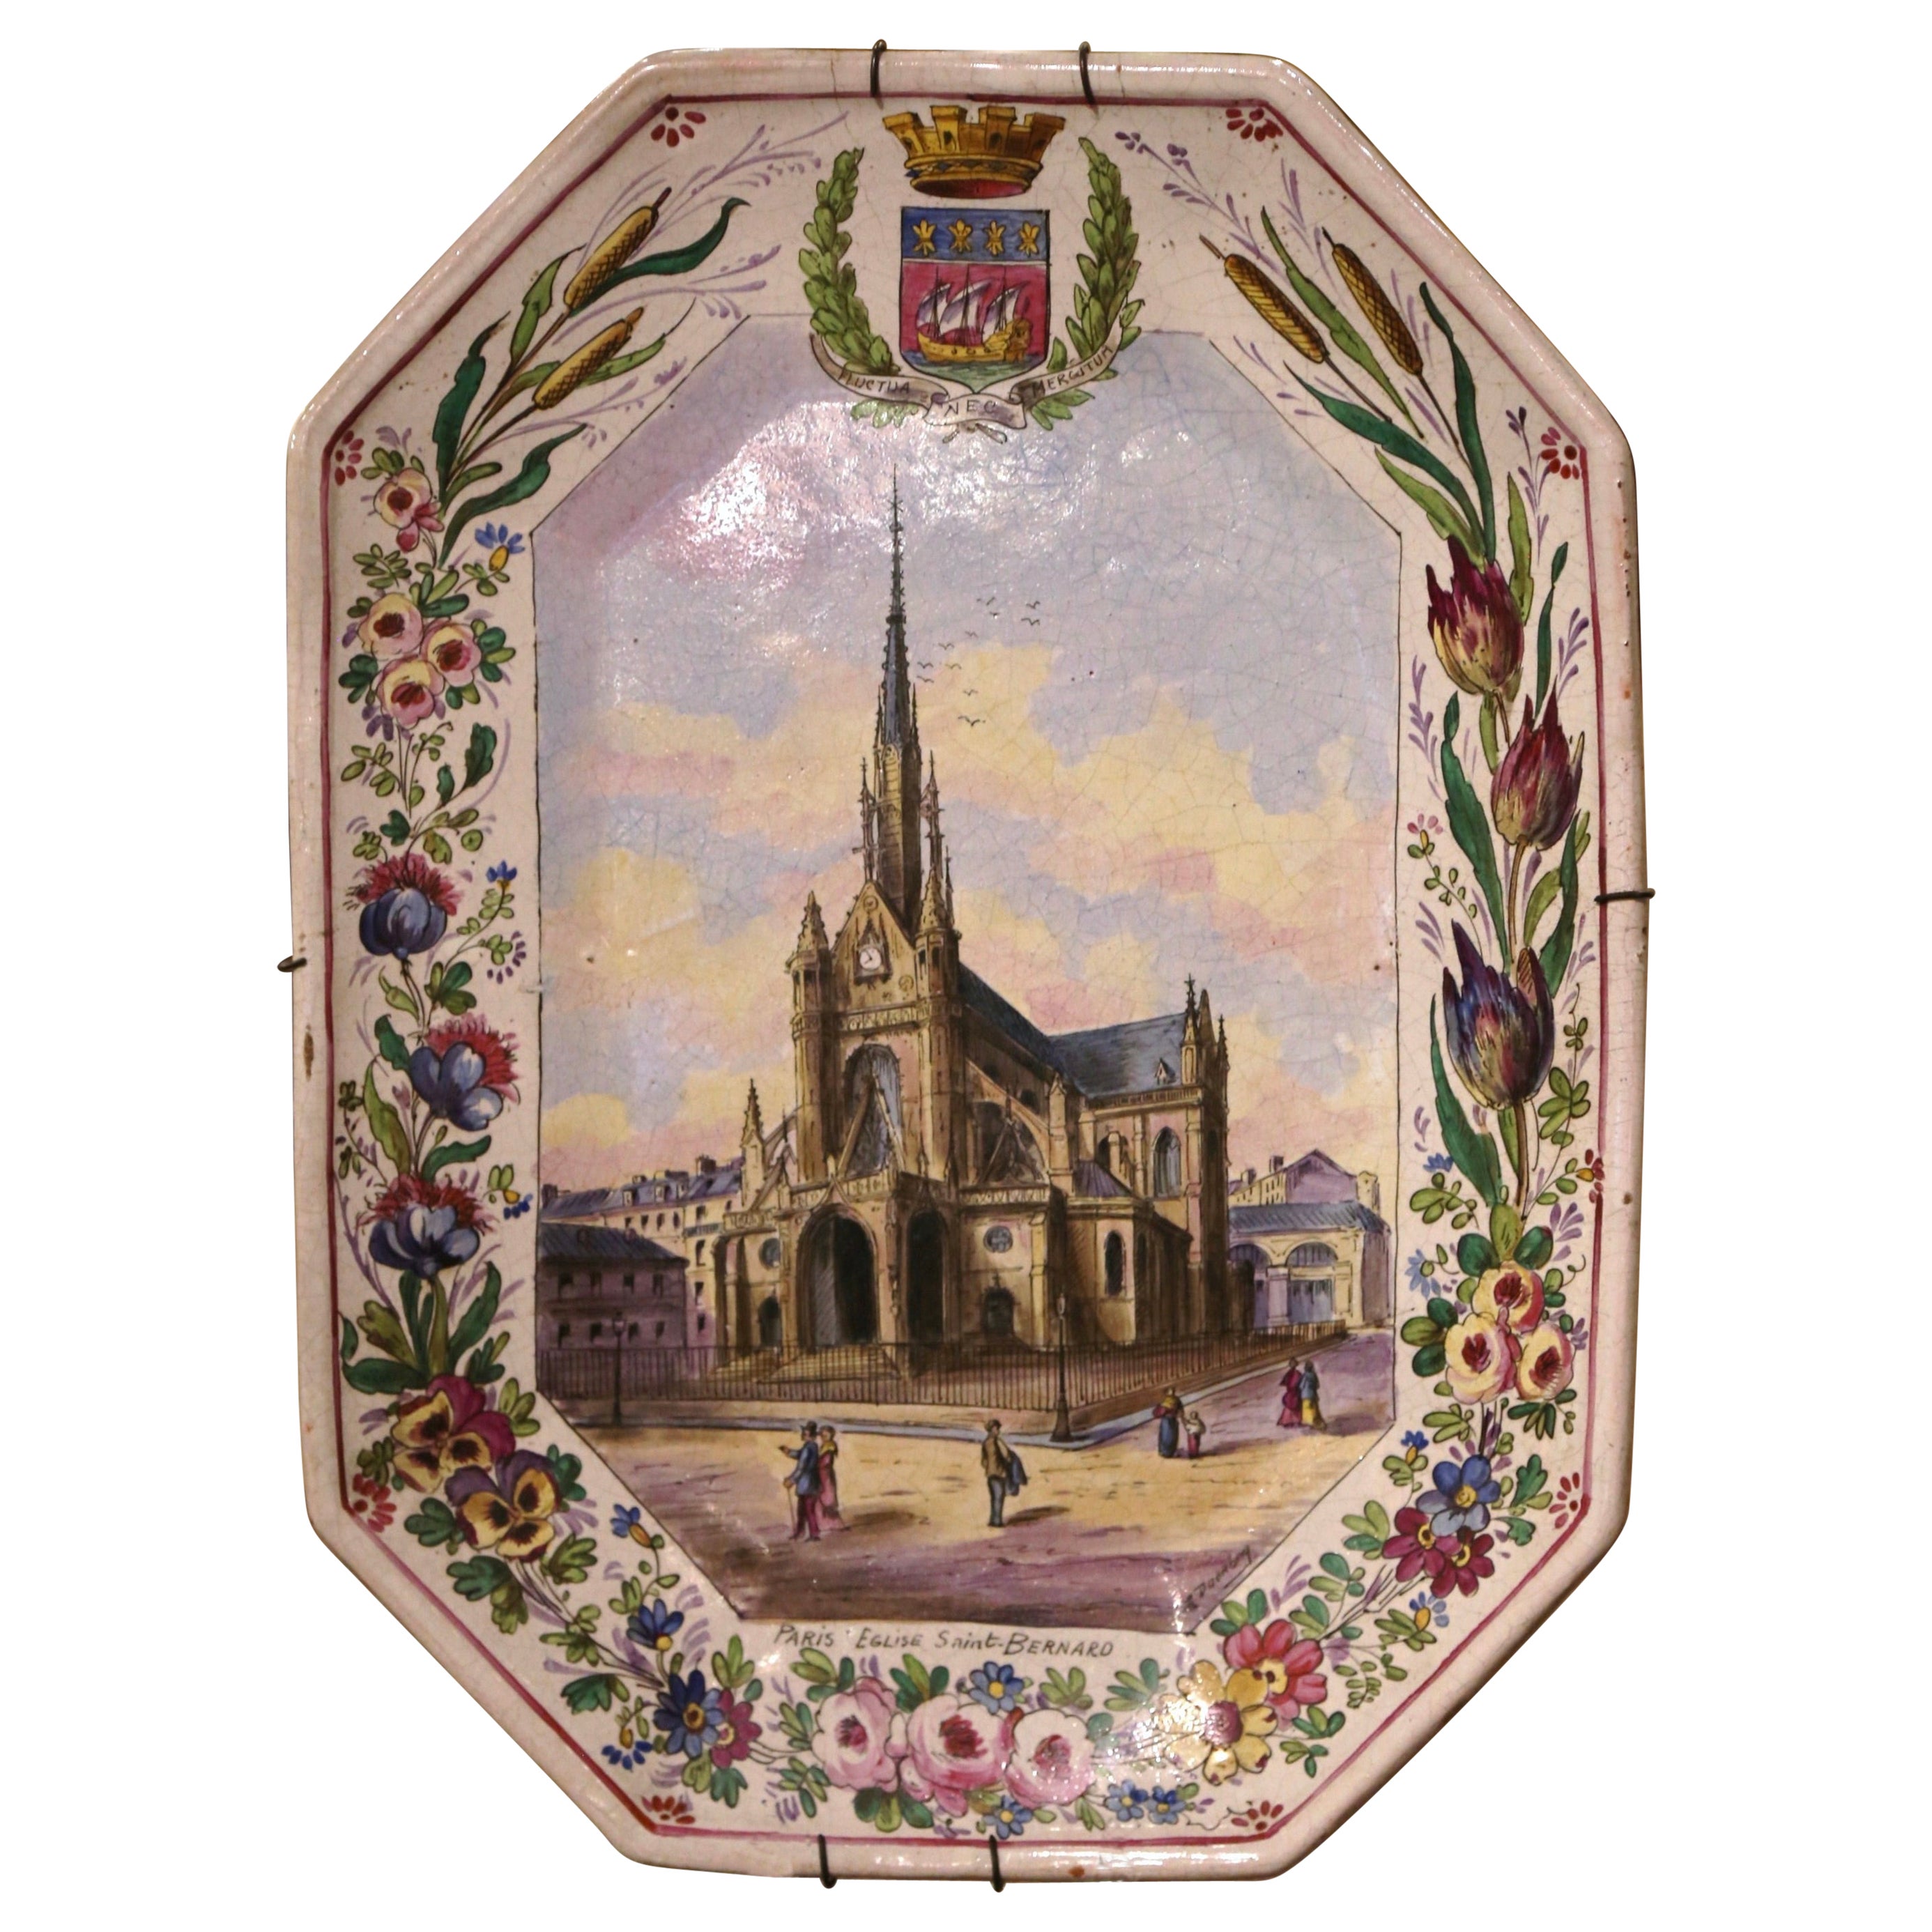 19th Century French Hand Painted Faience Wall Platter "Eglise St Bernard Paris"